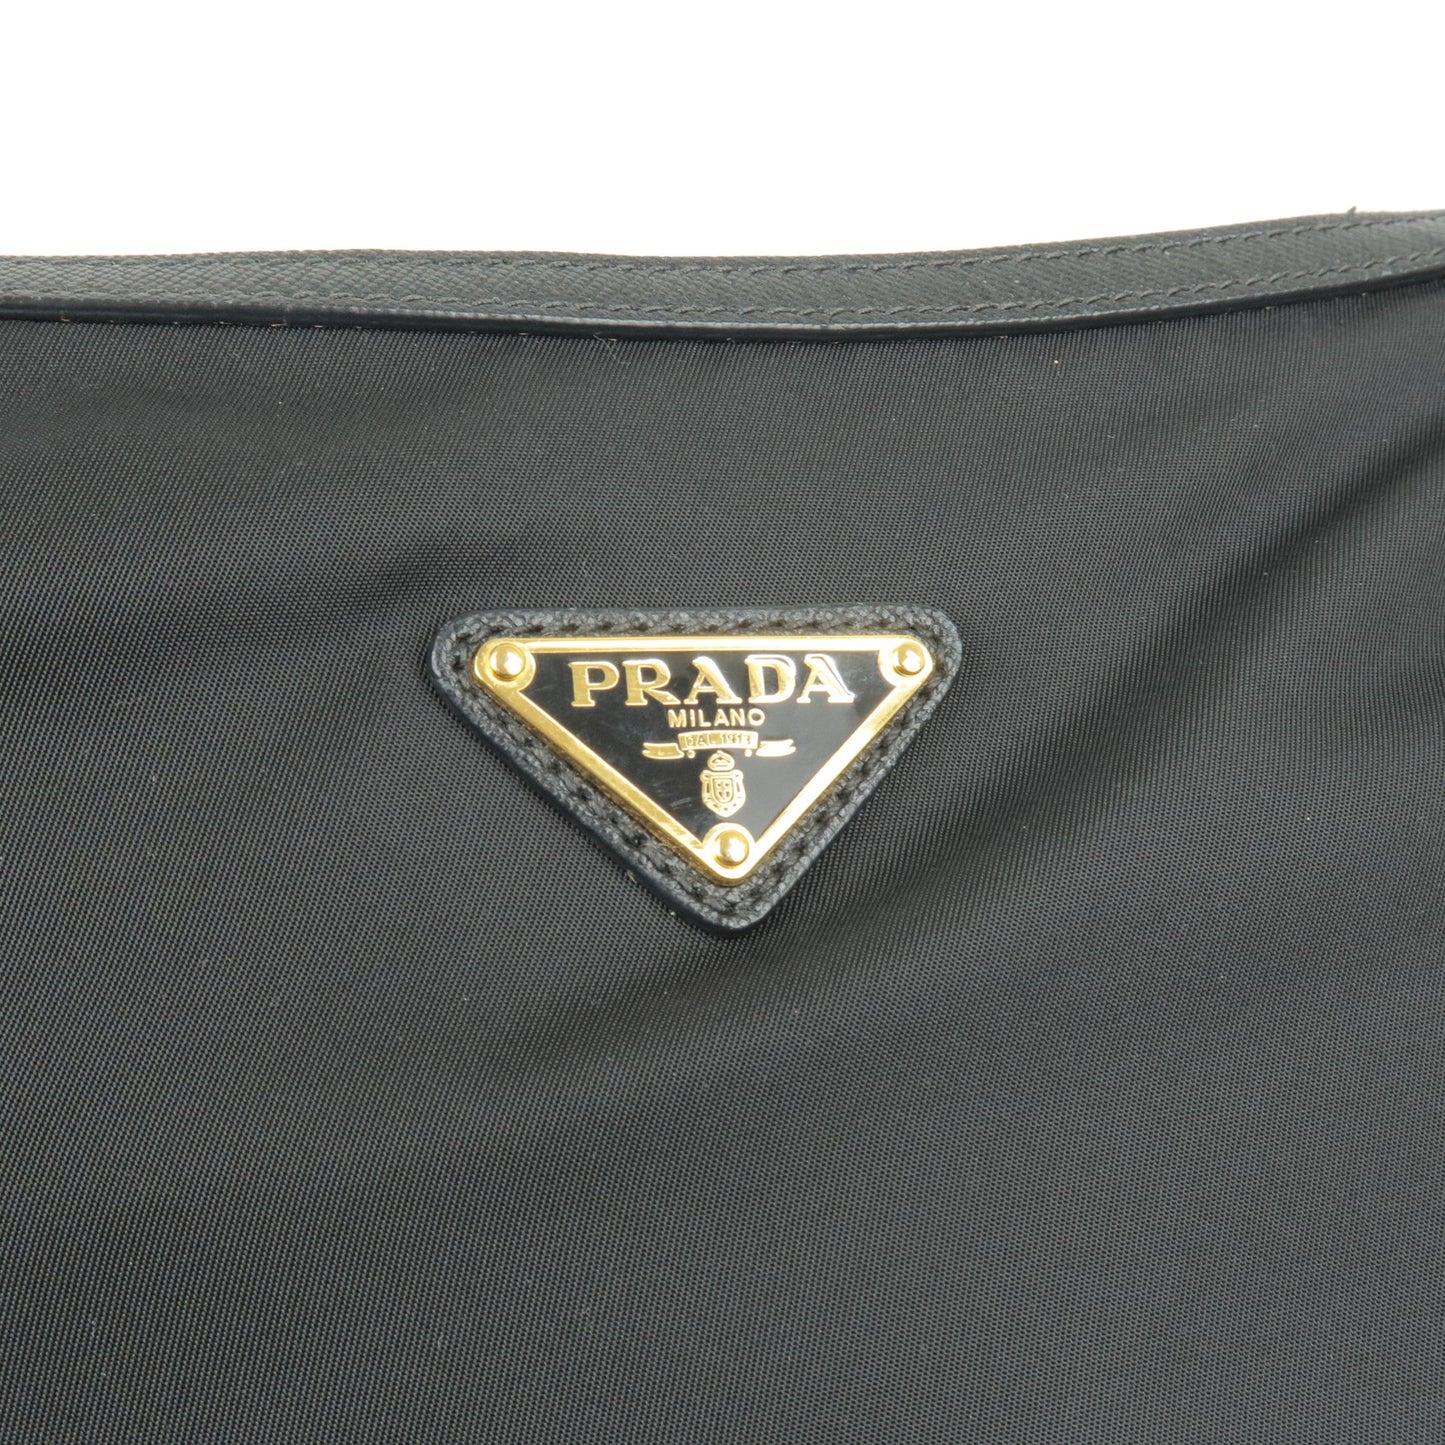 PRADA Nylon Leather Shoulder Bag Purse NERO Black BT0706